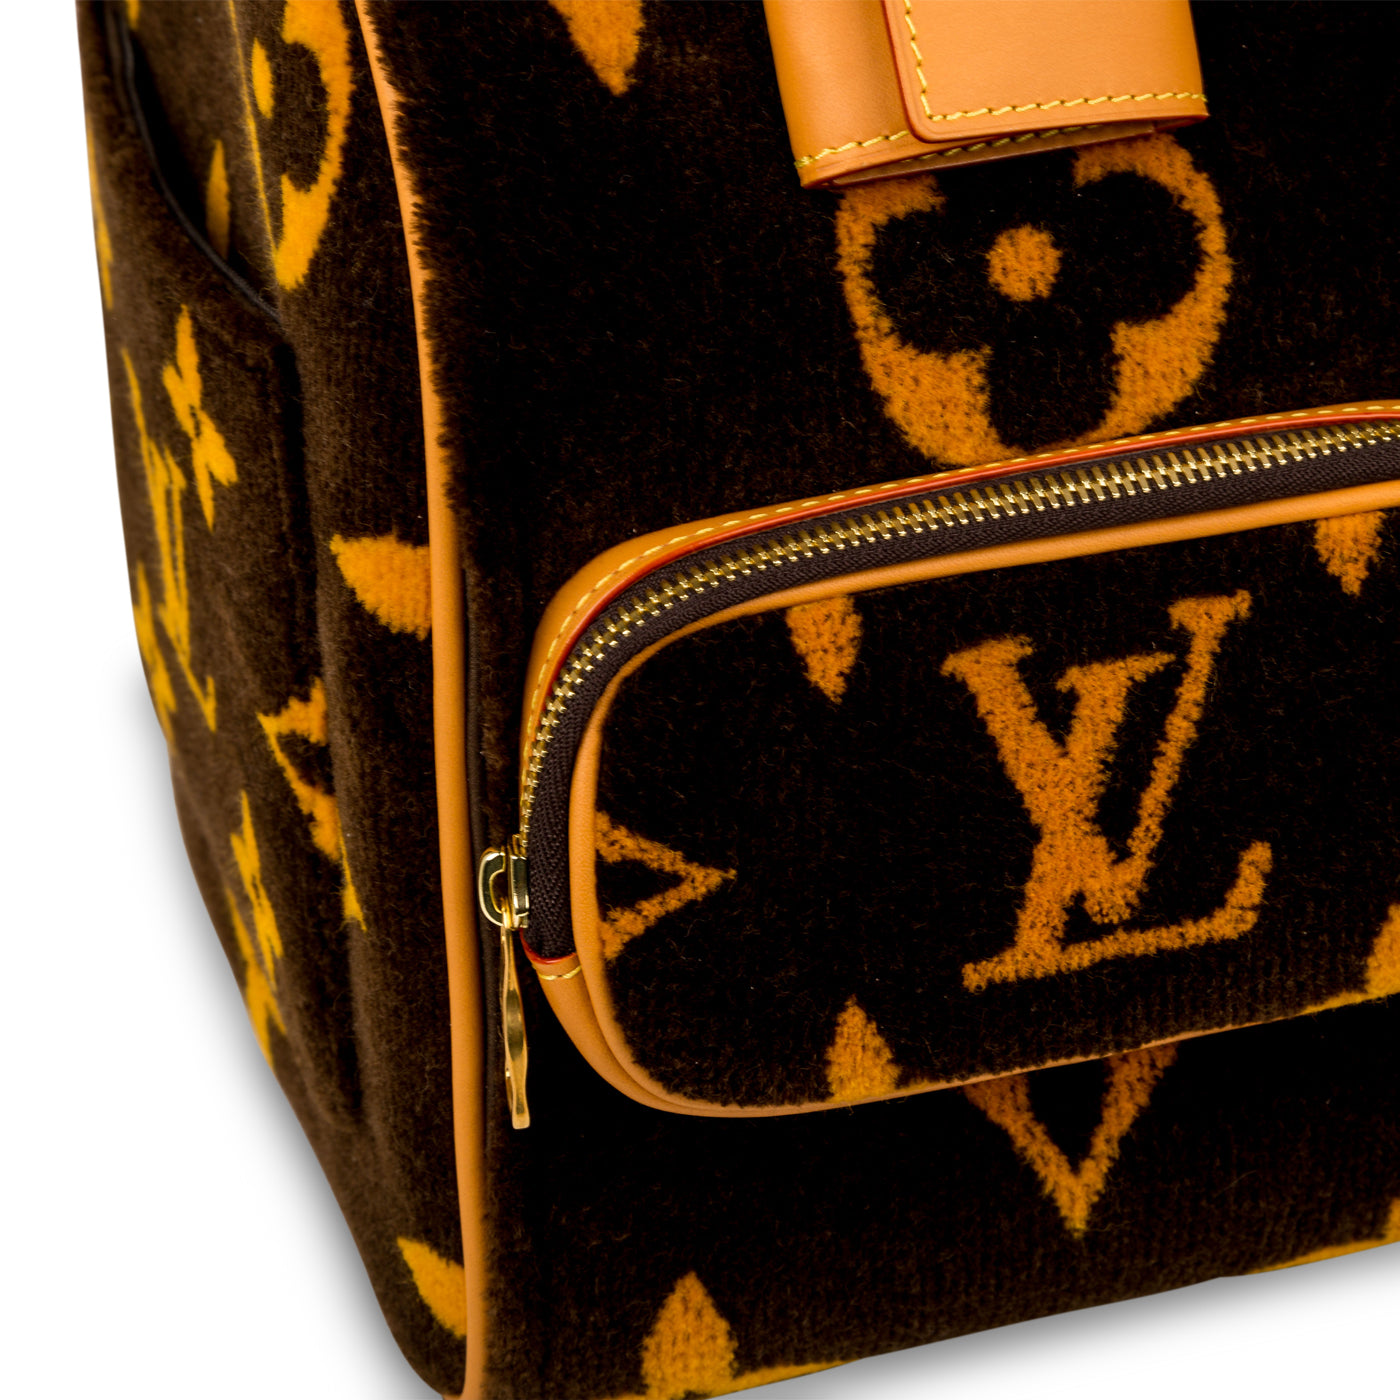 BRAND NEW-Limited edition Louis Vuitton keepall 50 Light Up virgil